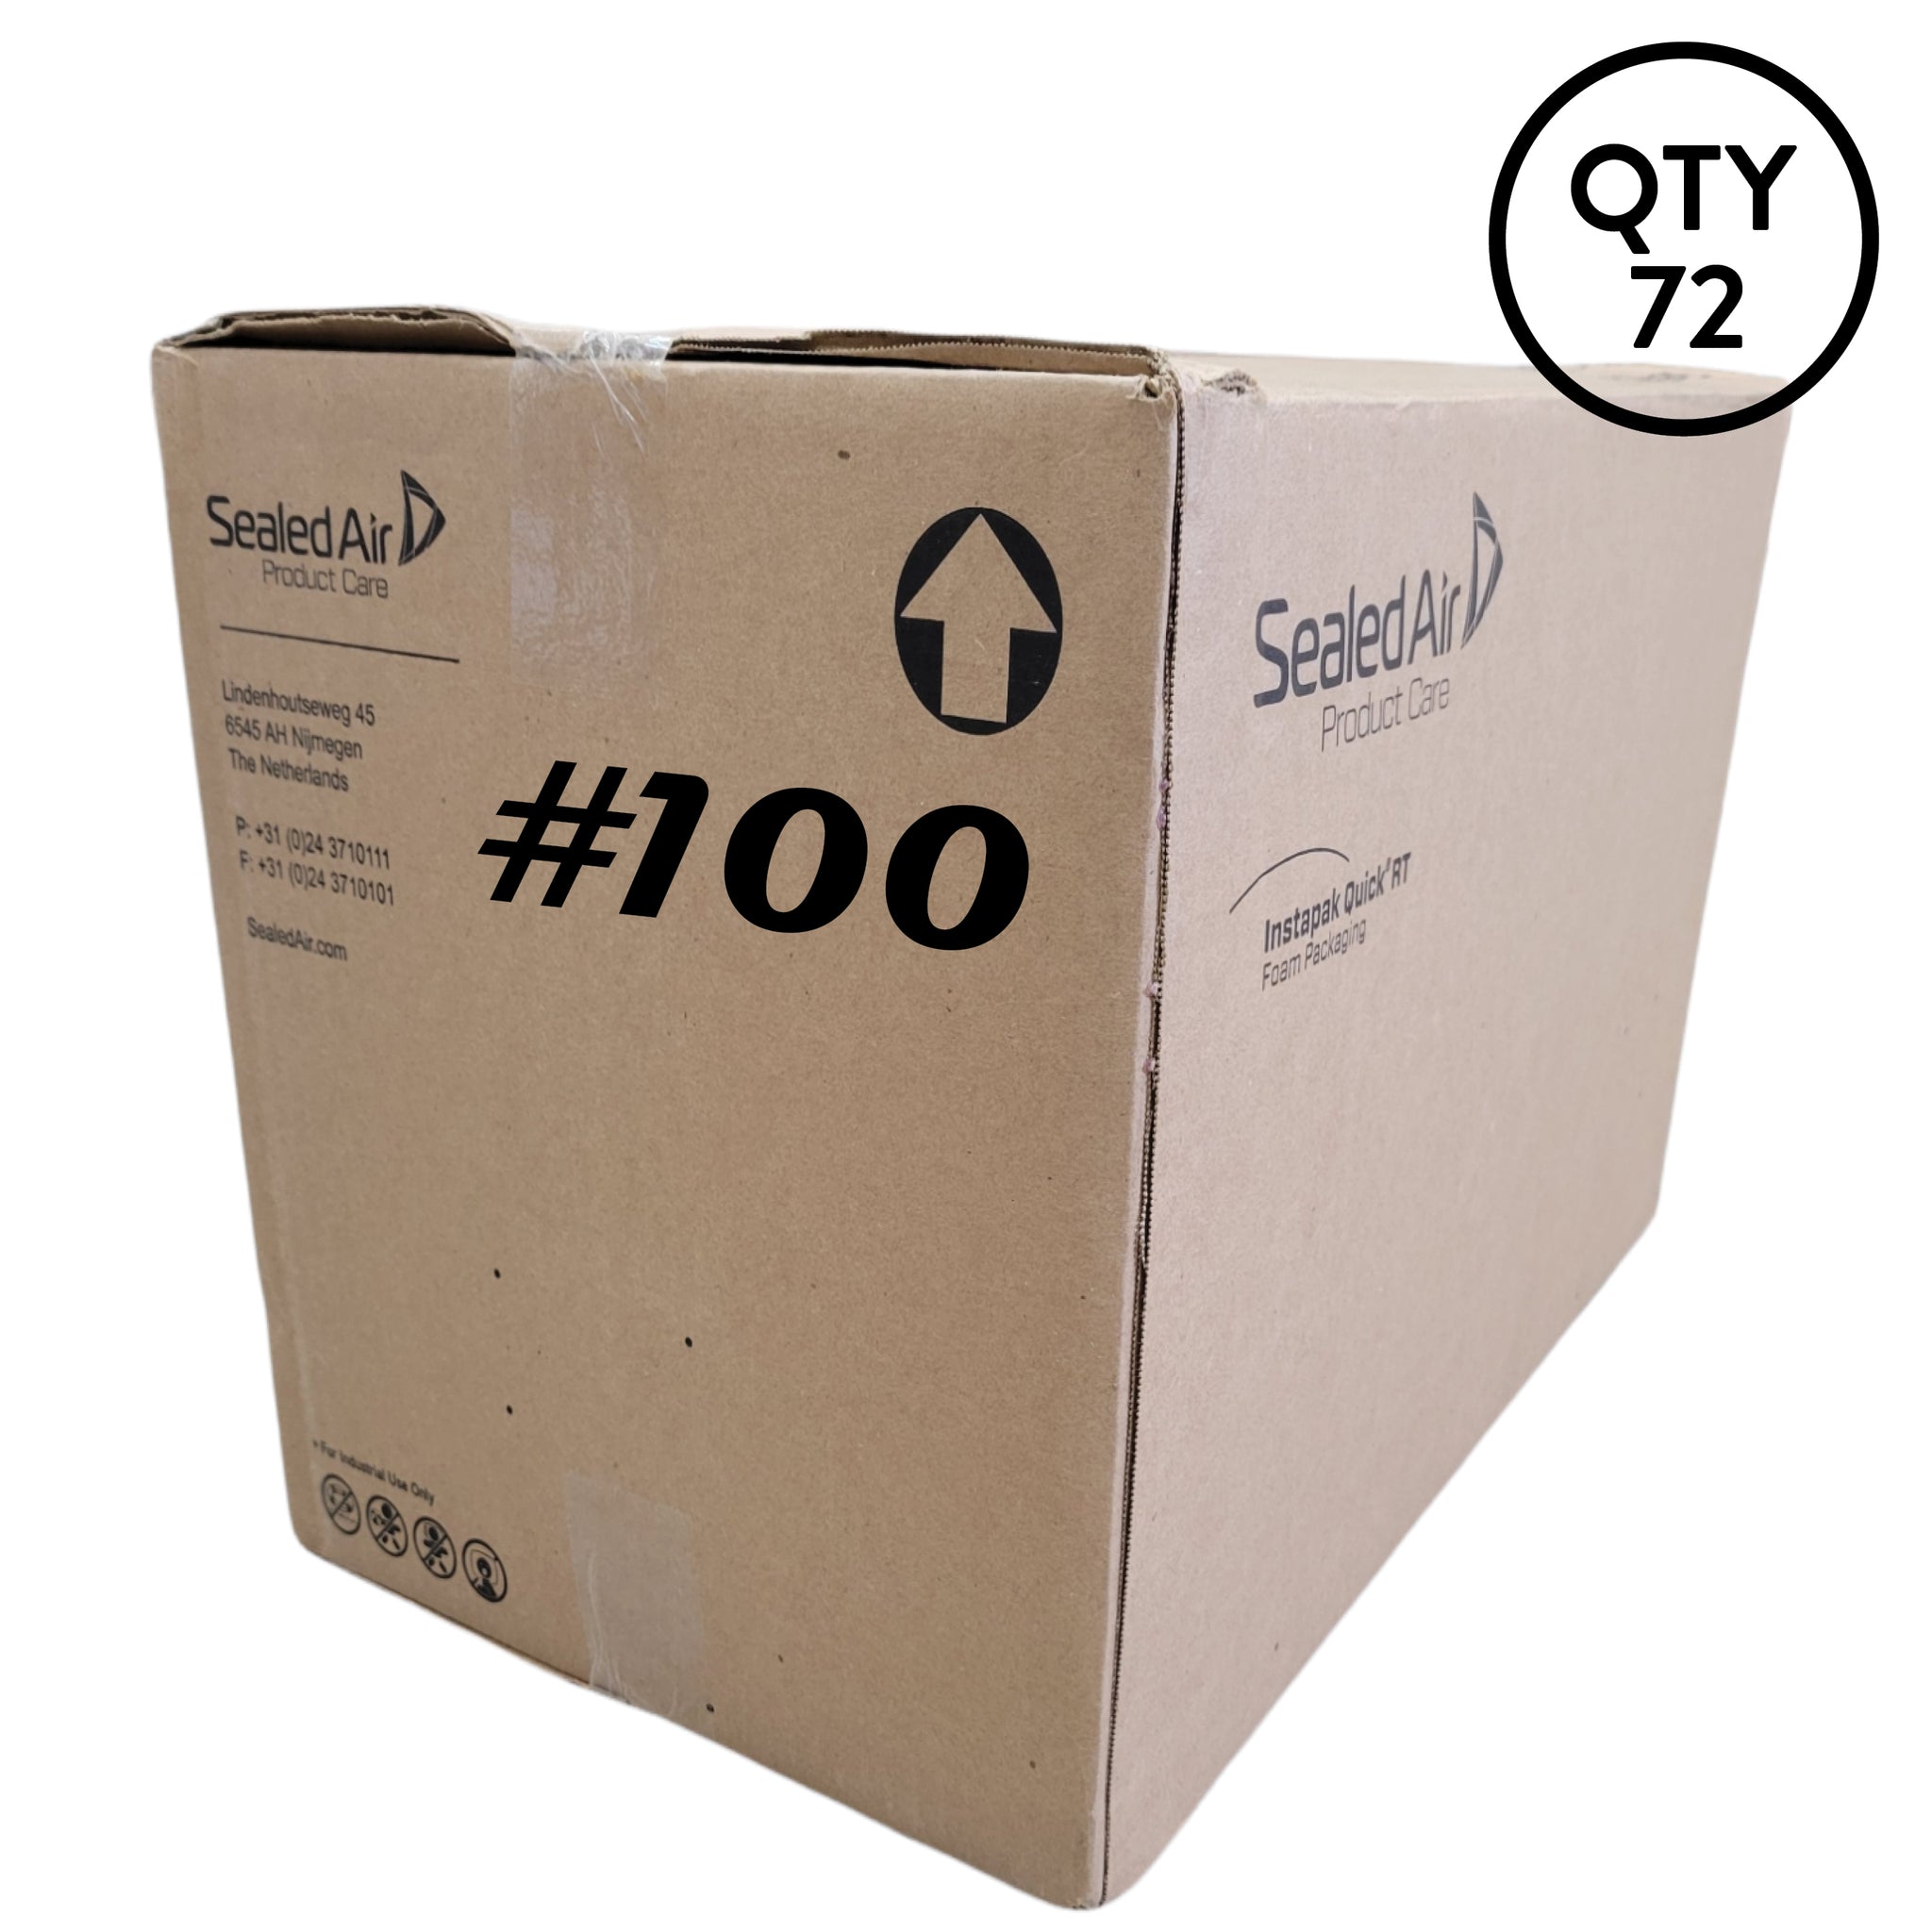 Sealed Air Instapak #100 (Qty 72)